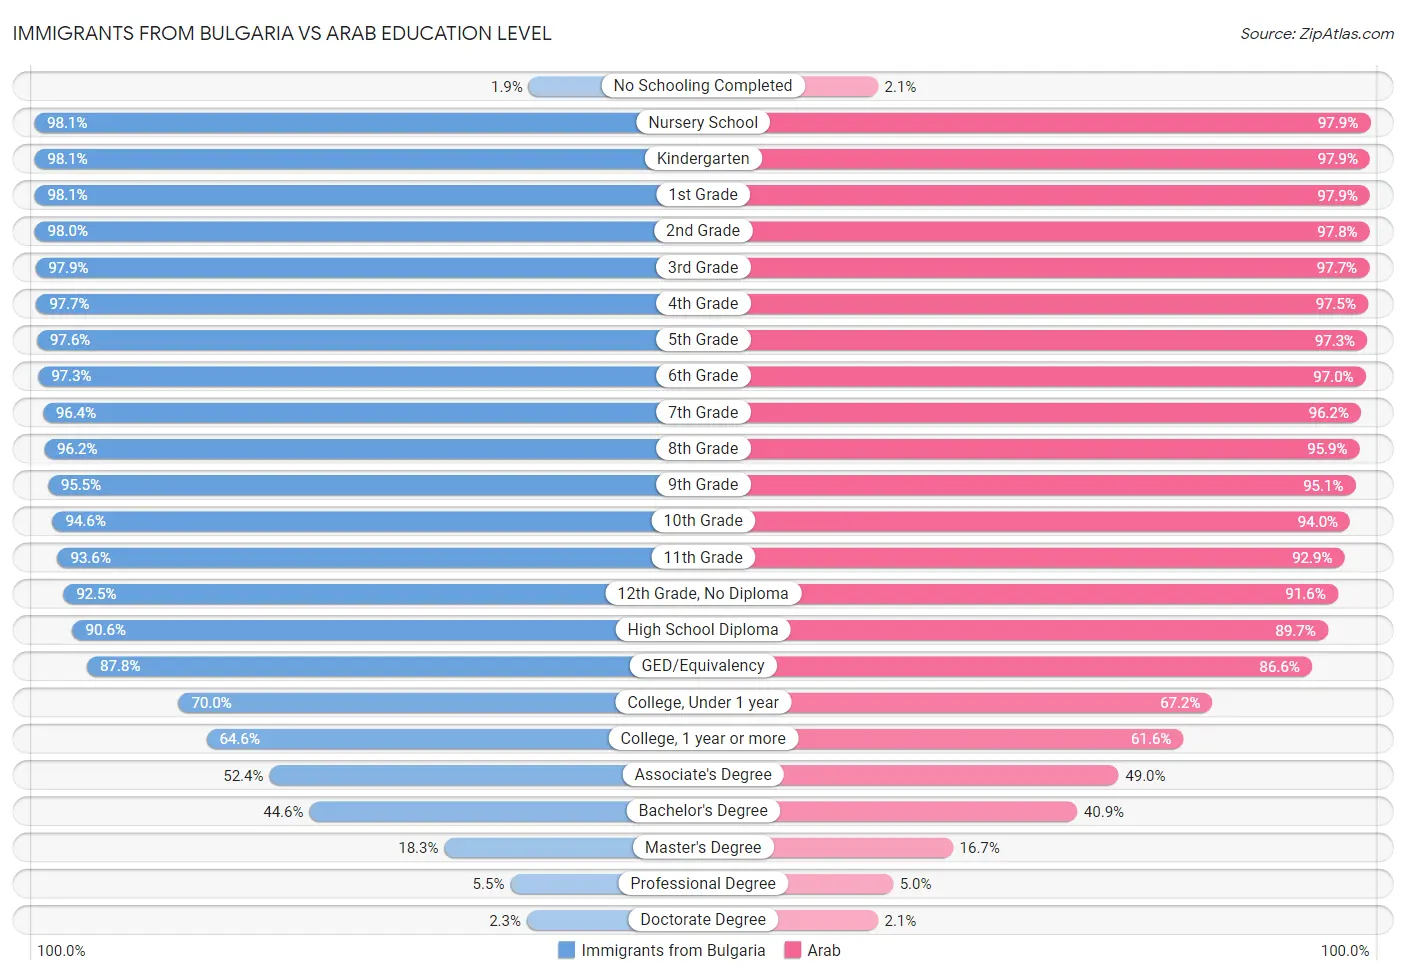 Immigrants from Bulgaria vs Arab Education Level